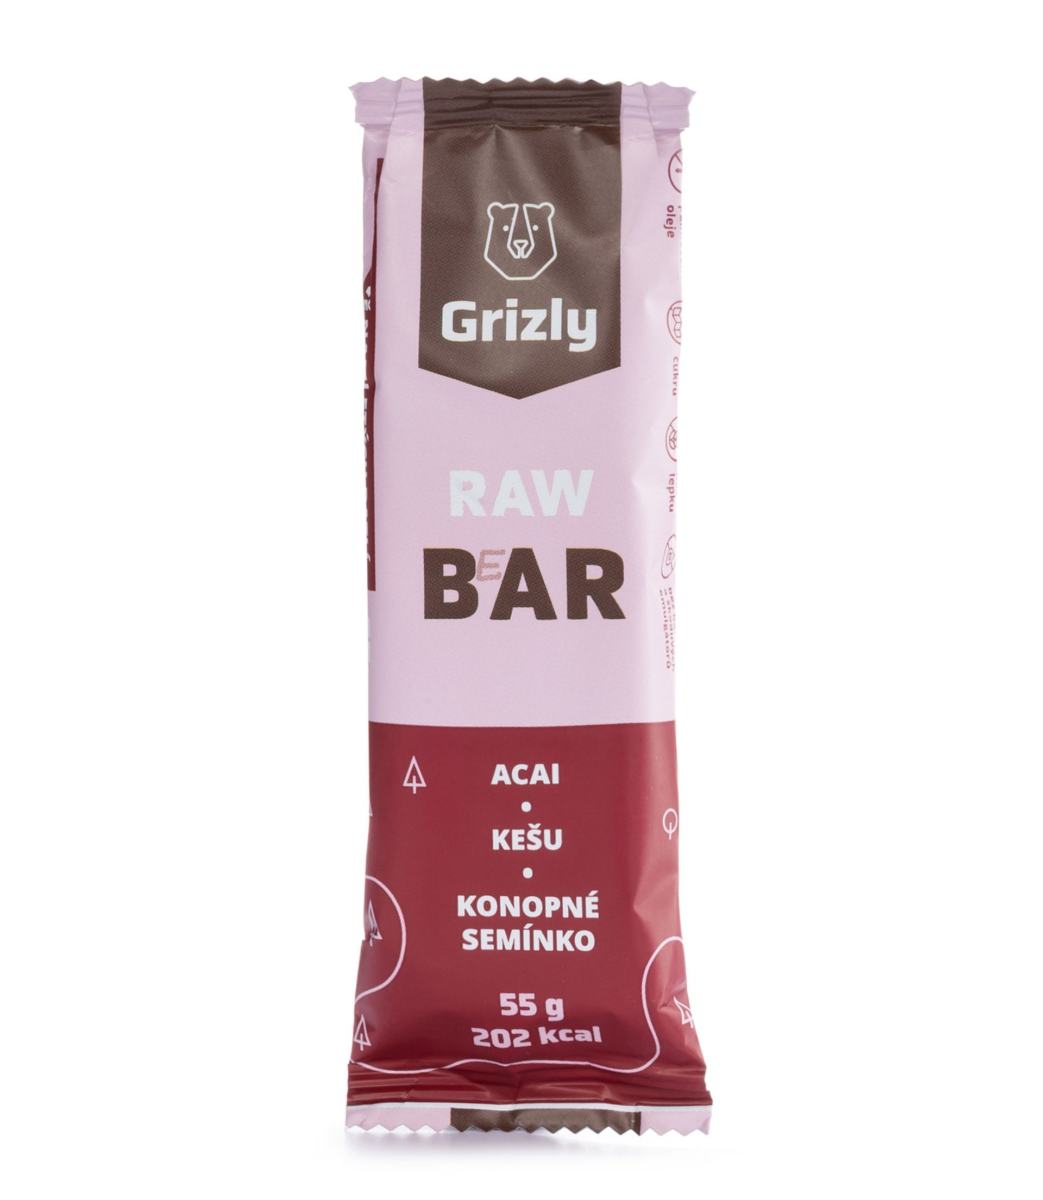 Grizly Raw Bar acai